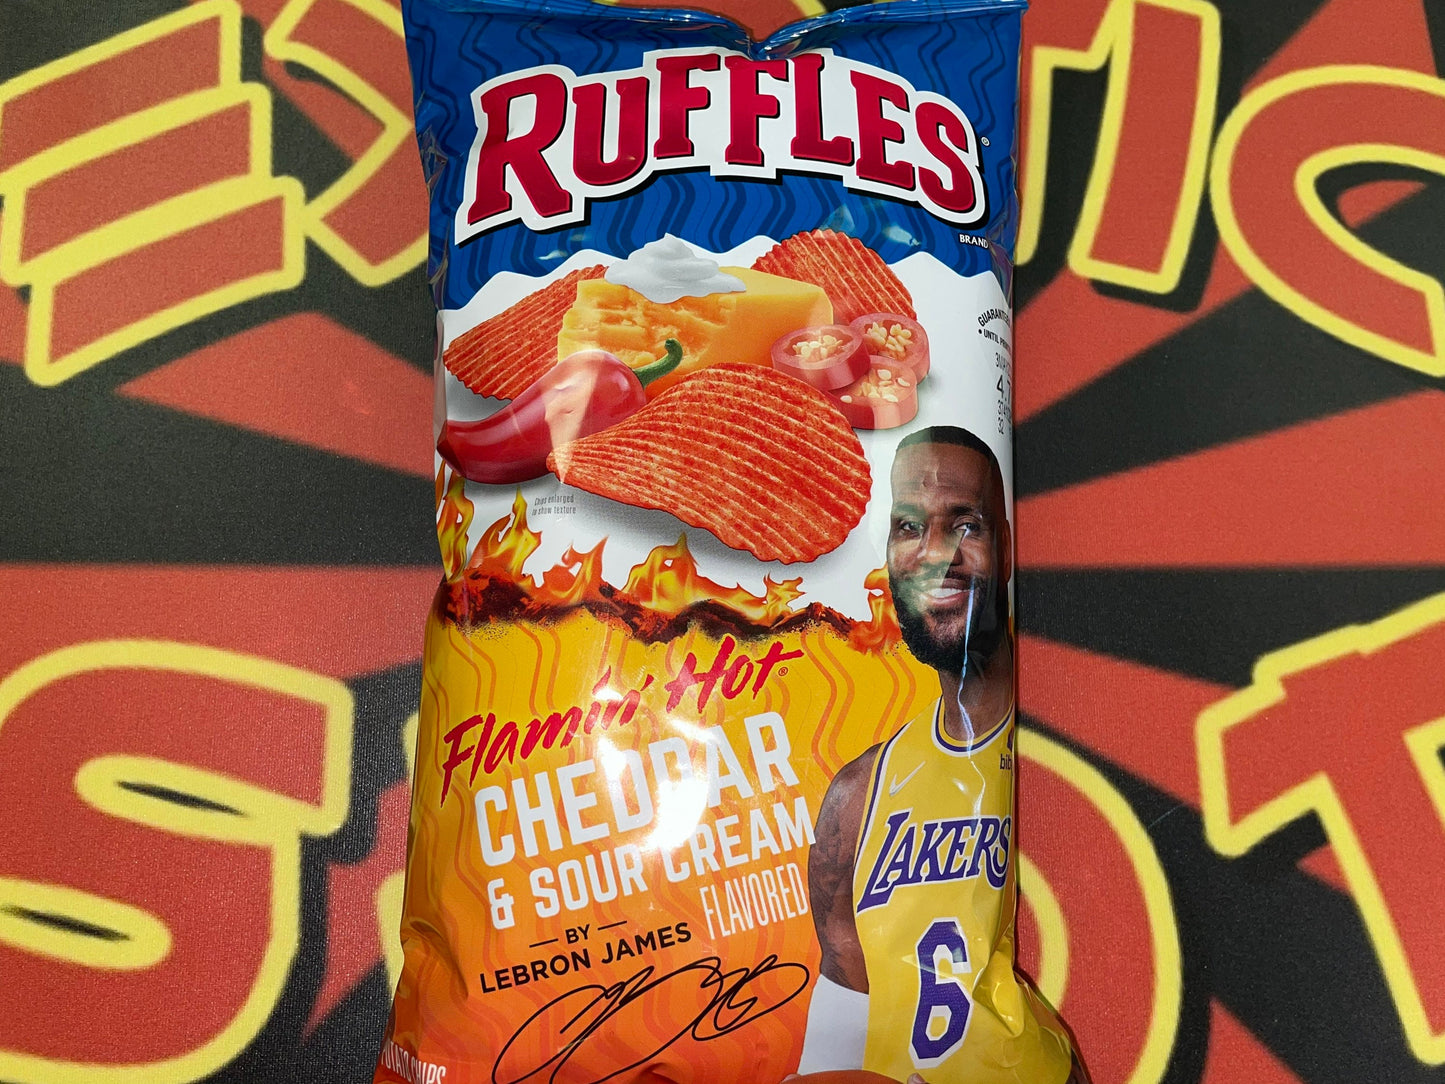 Ruffles Flamin Hot Cheddar& Sour Cream by Lebron James